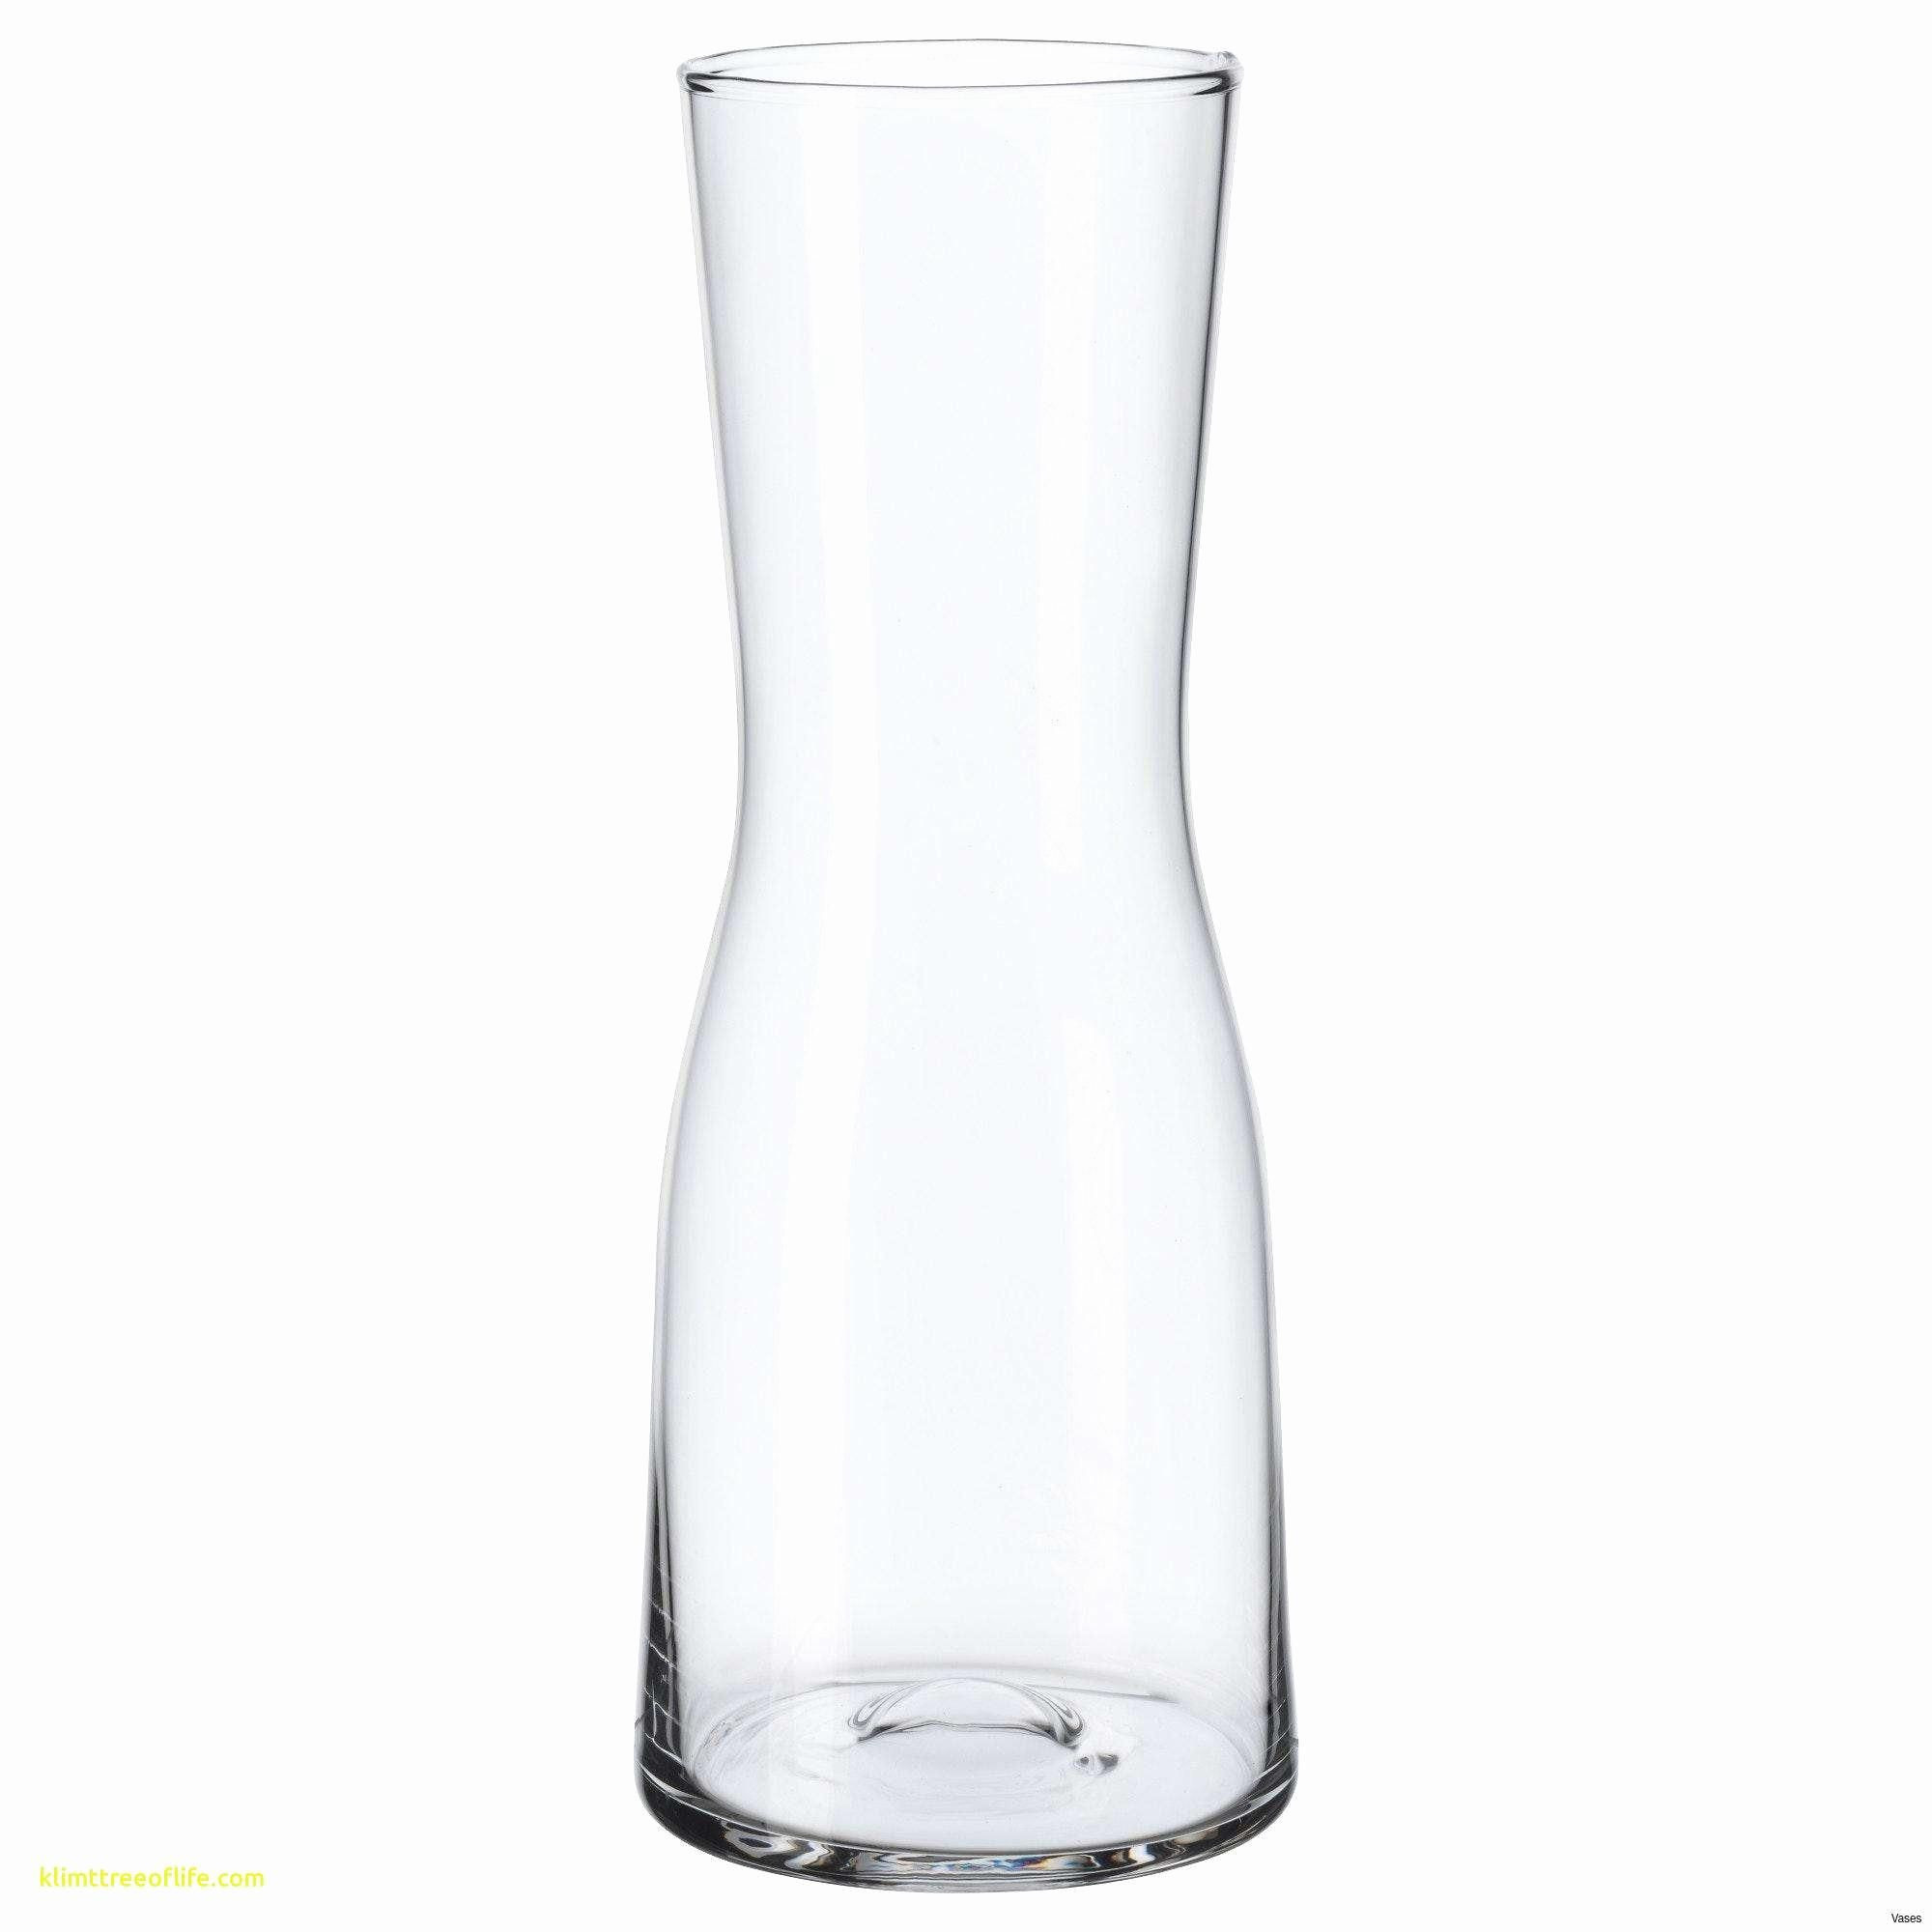 19 Fantastic Small Crystal Vase 2022 free download small crystal vase of 50 glass pedestal vase the weekly world inside 55 elegant small mantel clock 1142